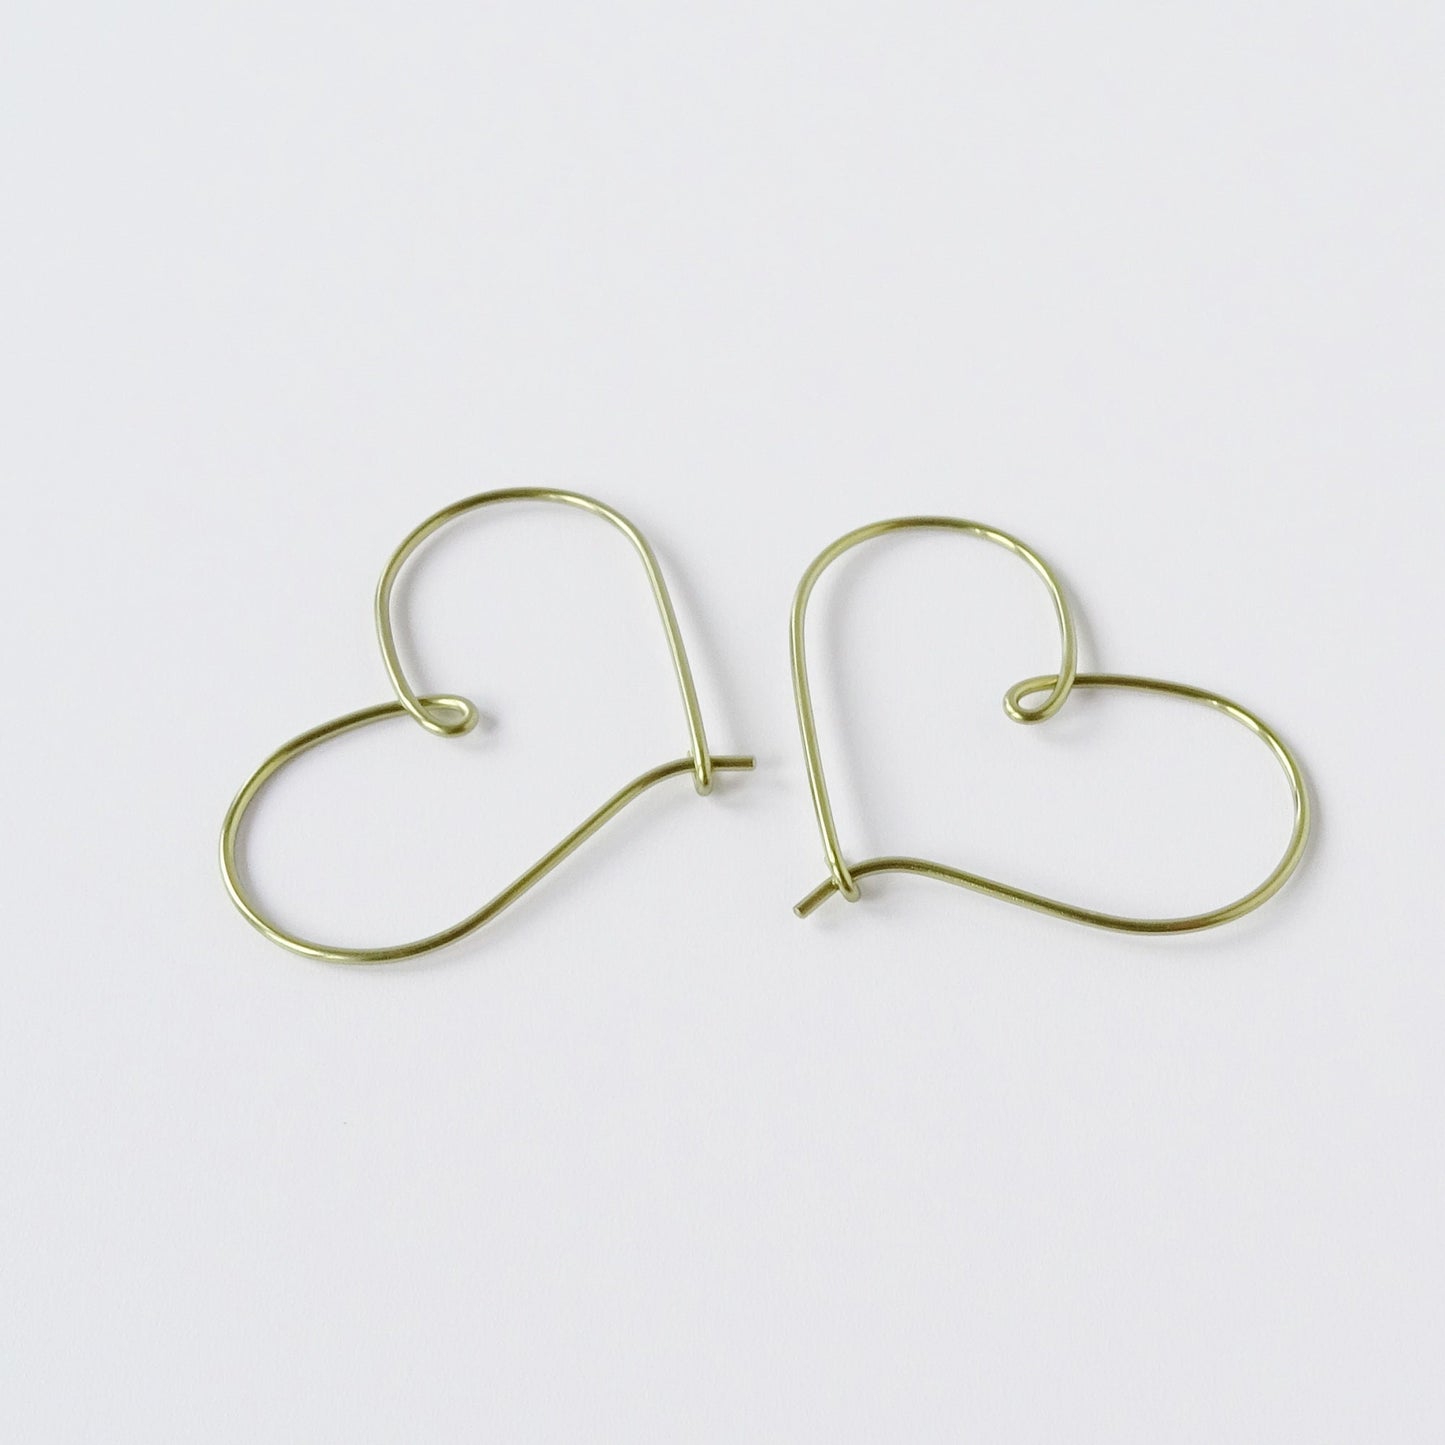 Small Heart Hoops Gold Niobium Hoop Earrings, Nickel Free Hypoallergenic Yellow Gold Anodized Niobium Heart Hoop Earrings for Sensitive Ears